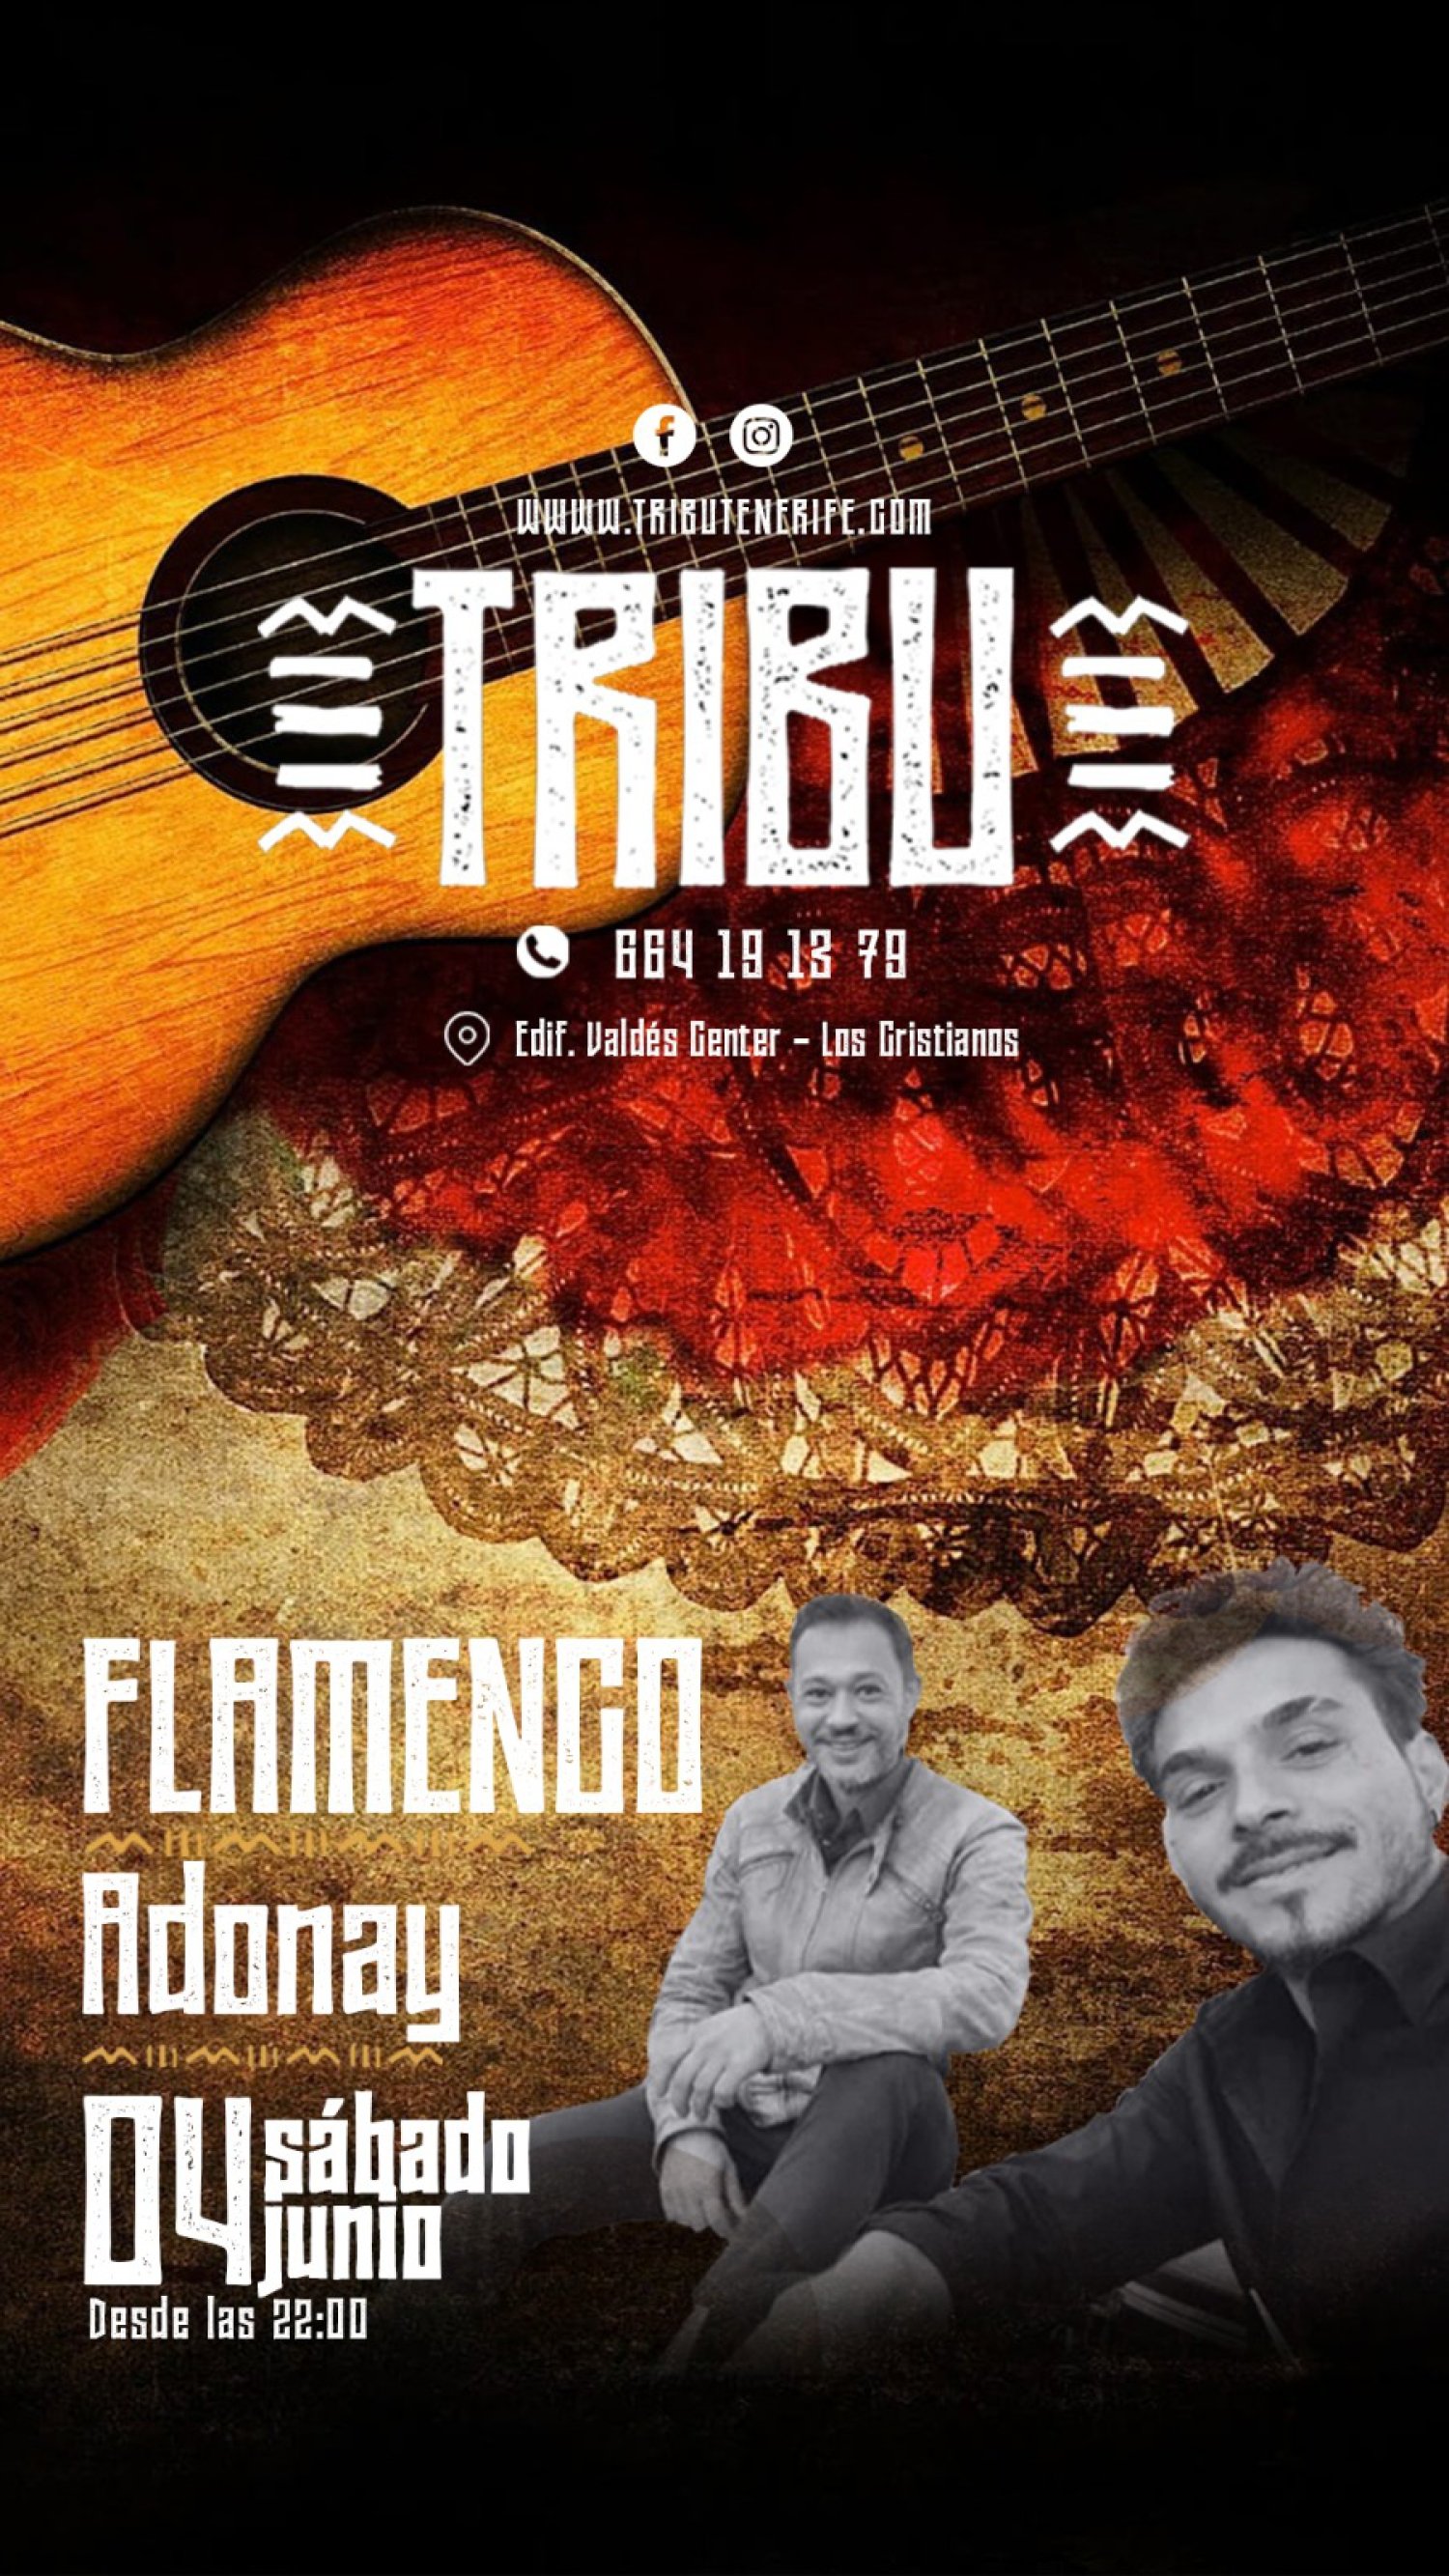 Flamenco nights with Adonay at Tribu Cafe & Cocktails Club